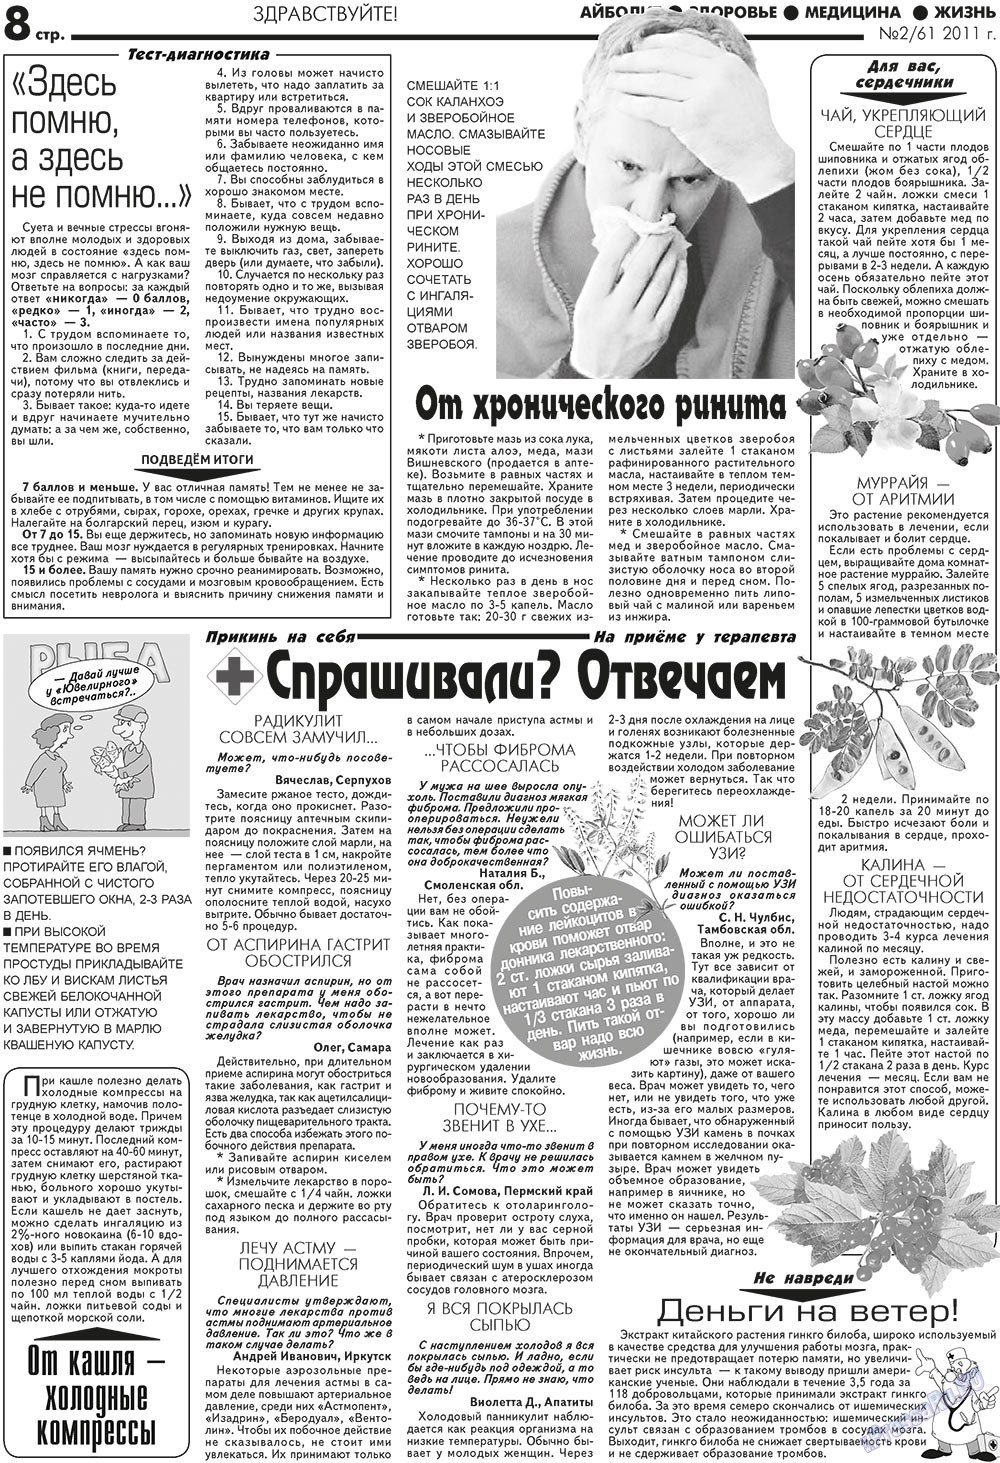 АйБолит (газета). 2011 год, номер 2, стр. 8